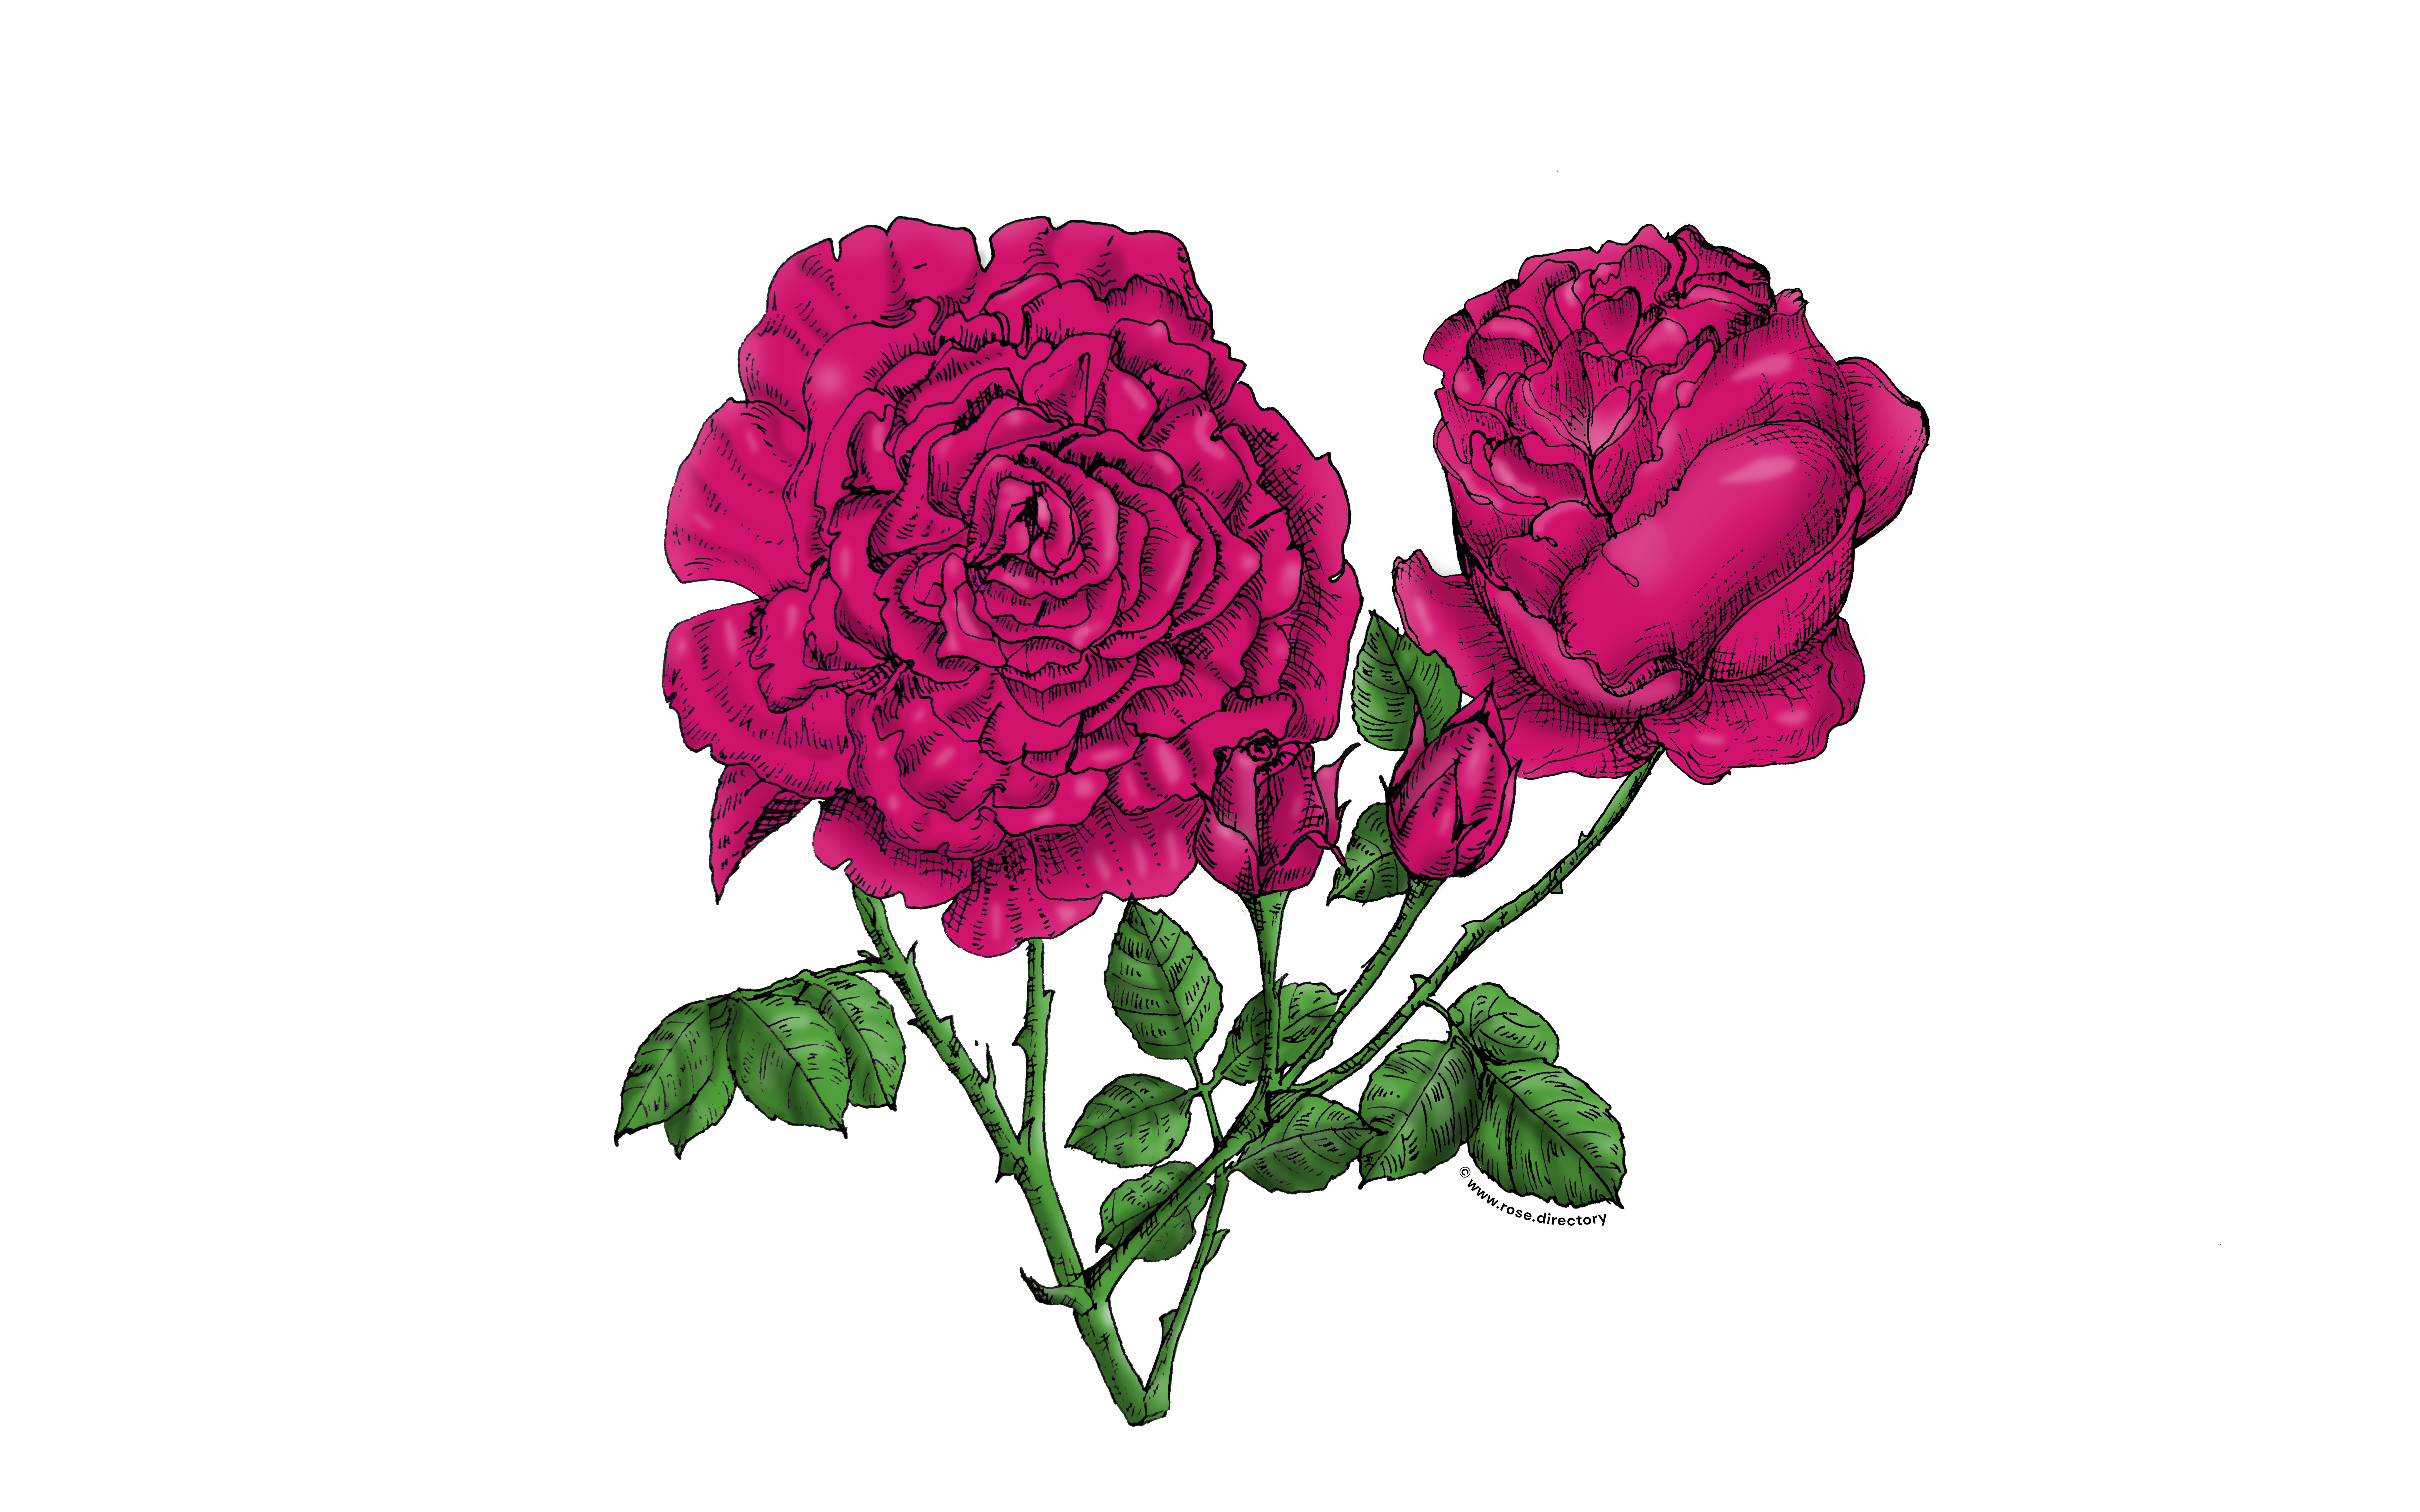 Deep Pink Cupped Rose Bloom Very Full 40+ Petals In 3+ Rows